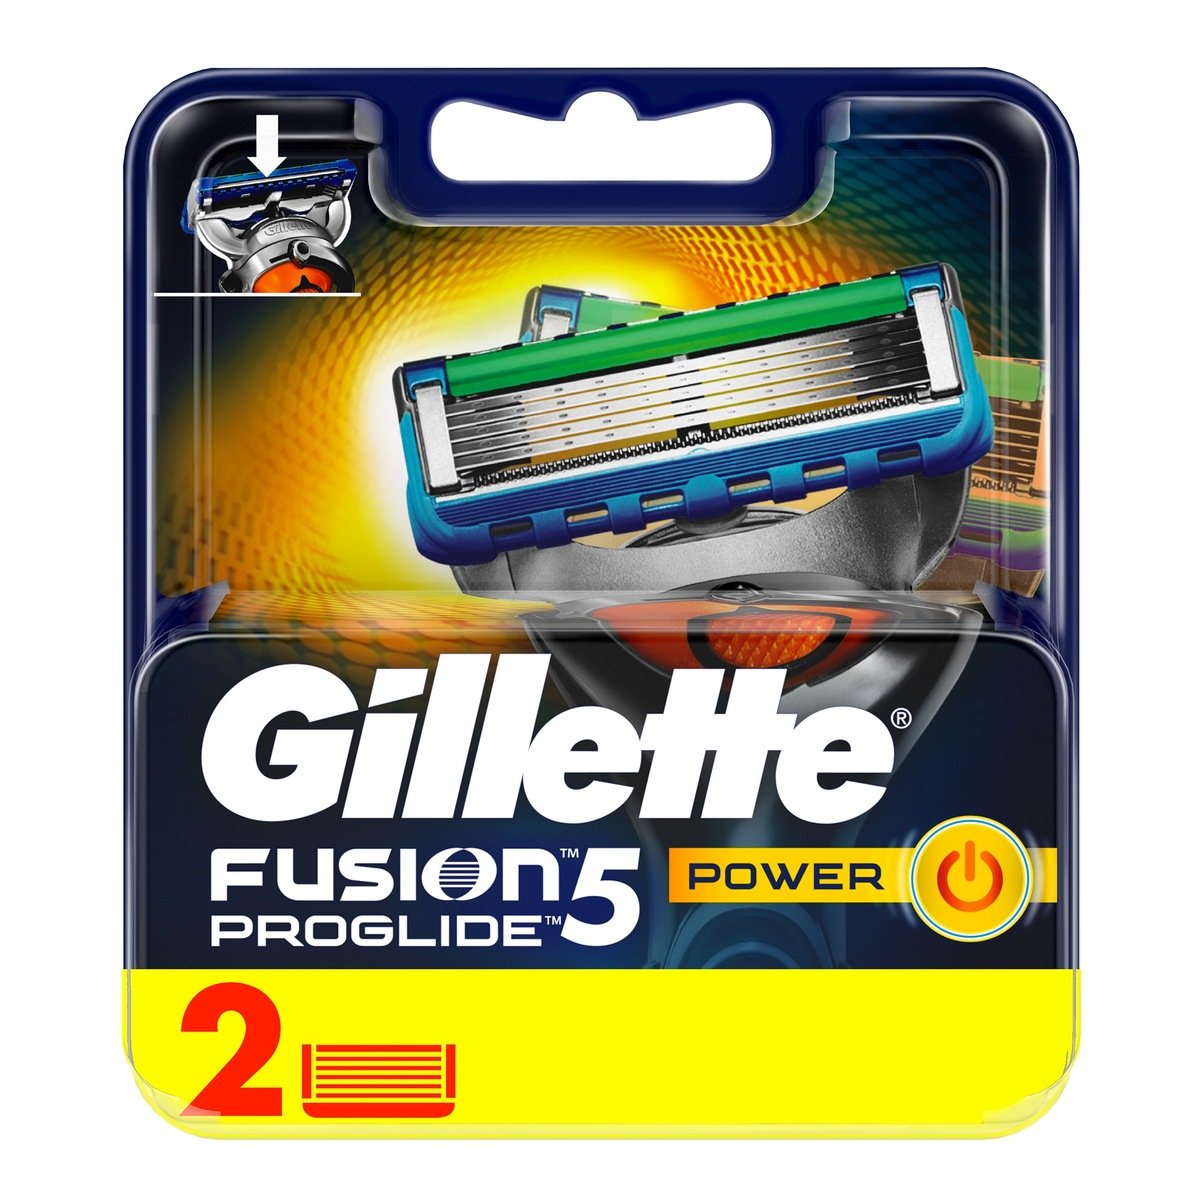 Gillette Fusion ProGlide Power Men's Razor Blades 2 pcs